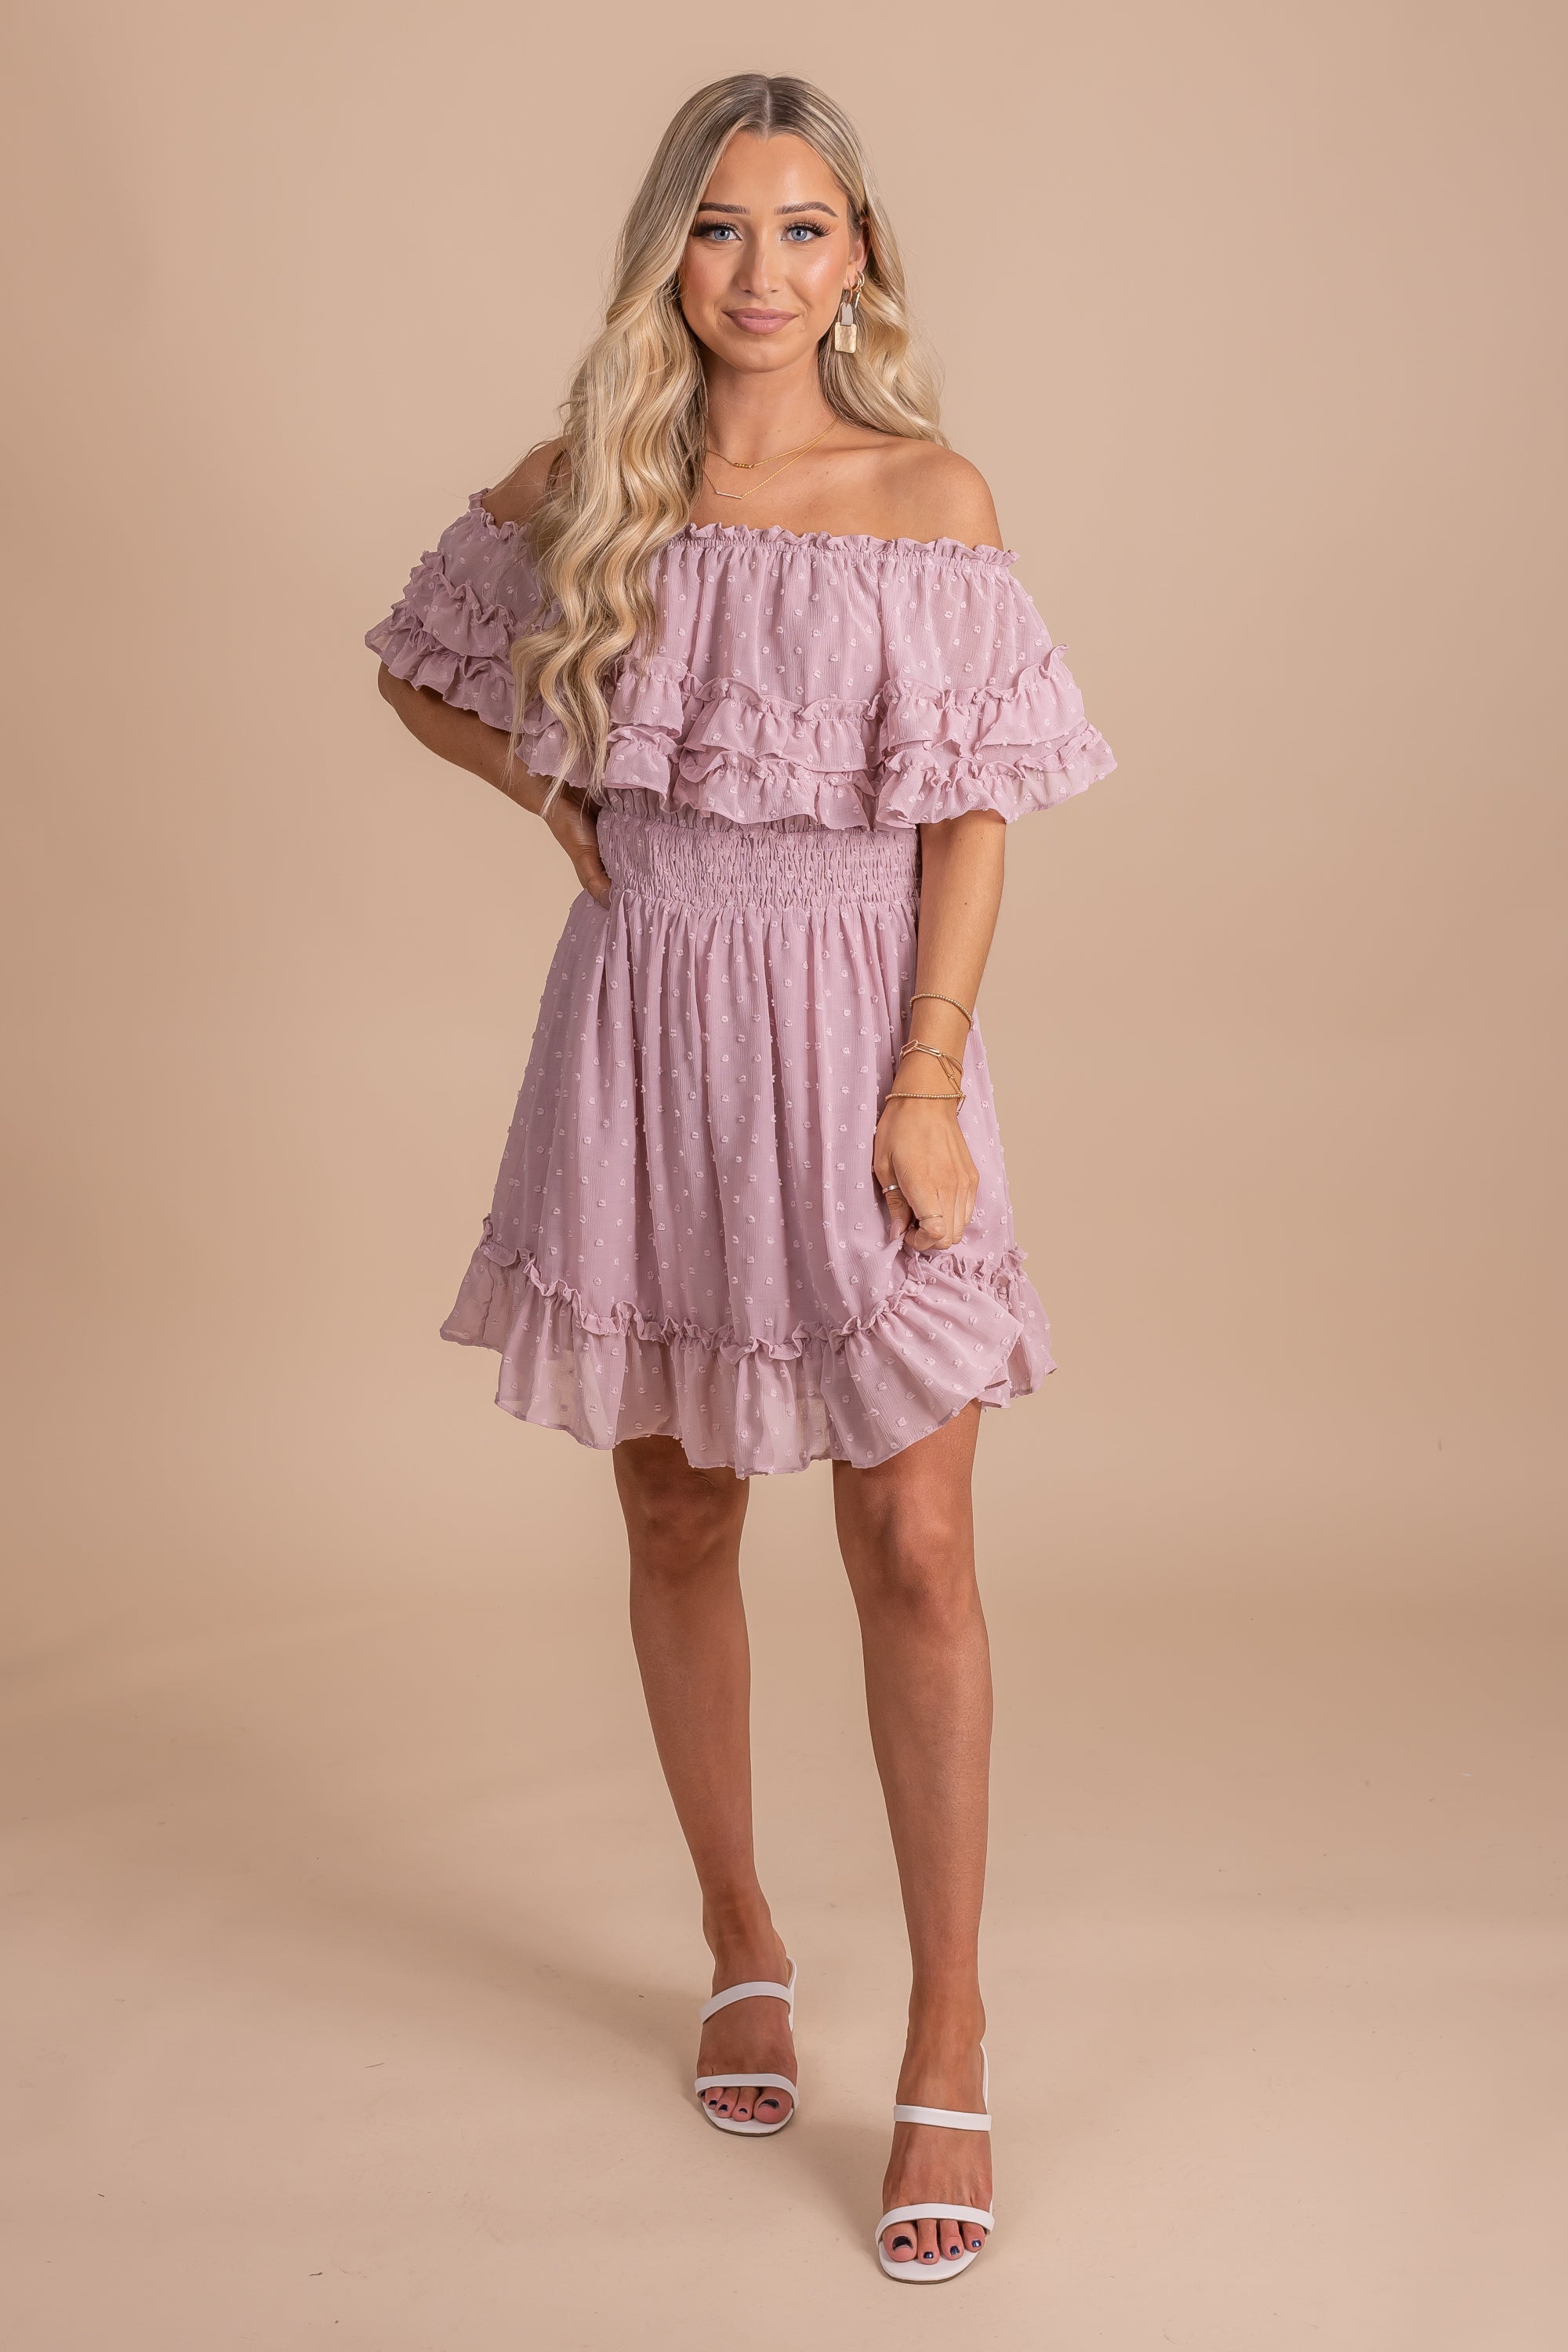 Hopeless Romantic Textured Mini Dress